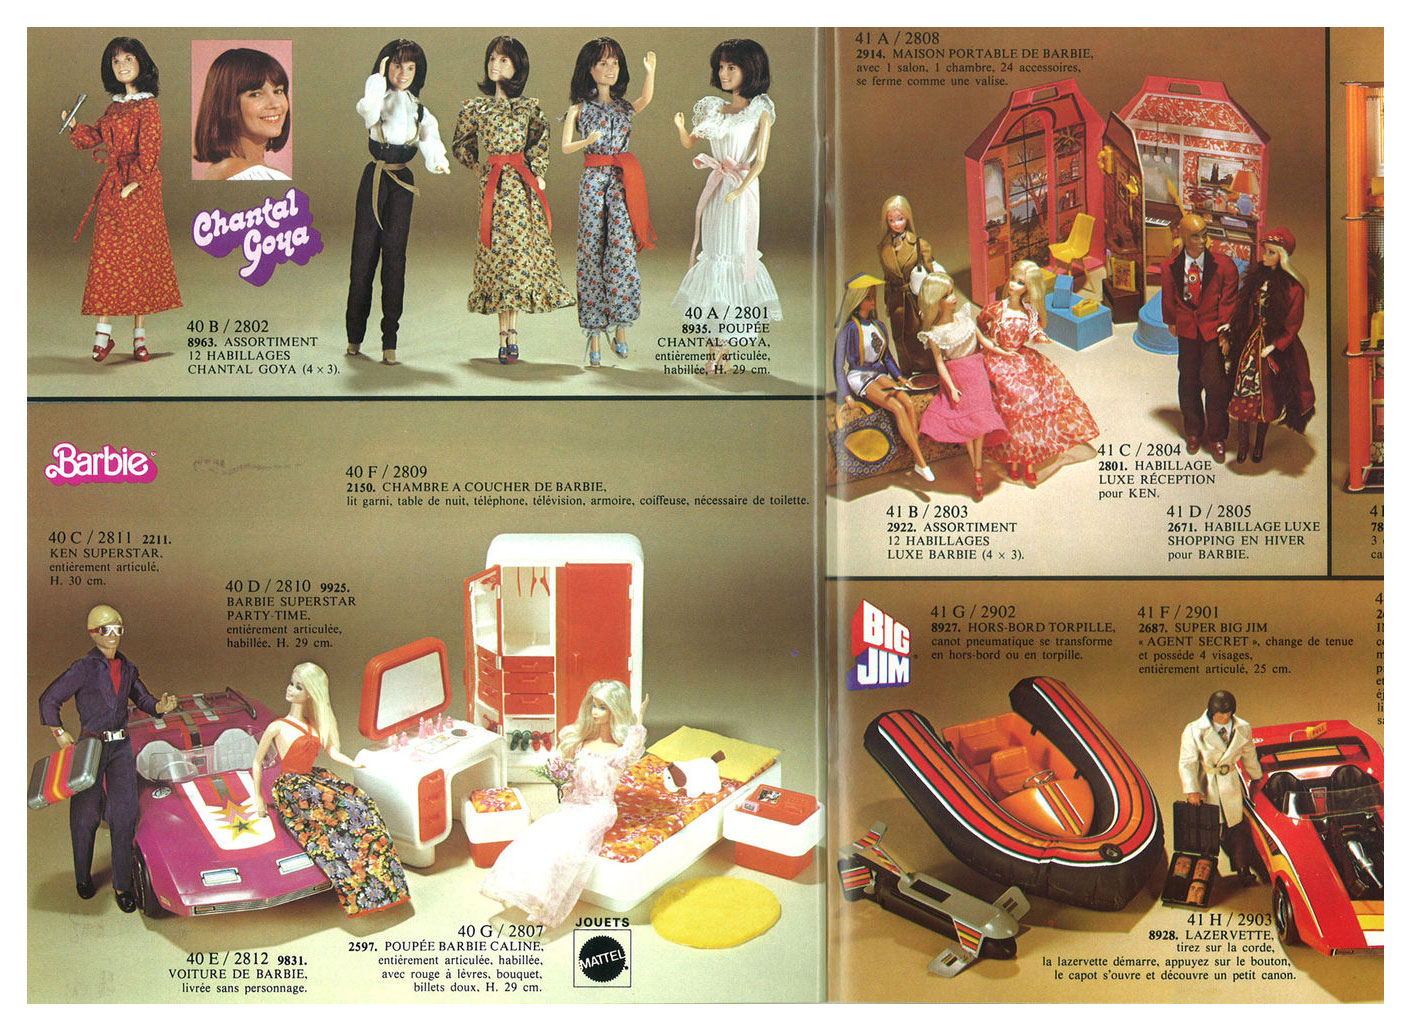 From 1979 French Difrajo (Distributeurs français du jouets) Noel catalogue